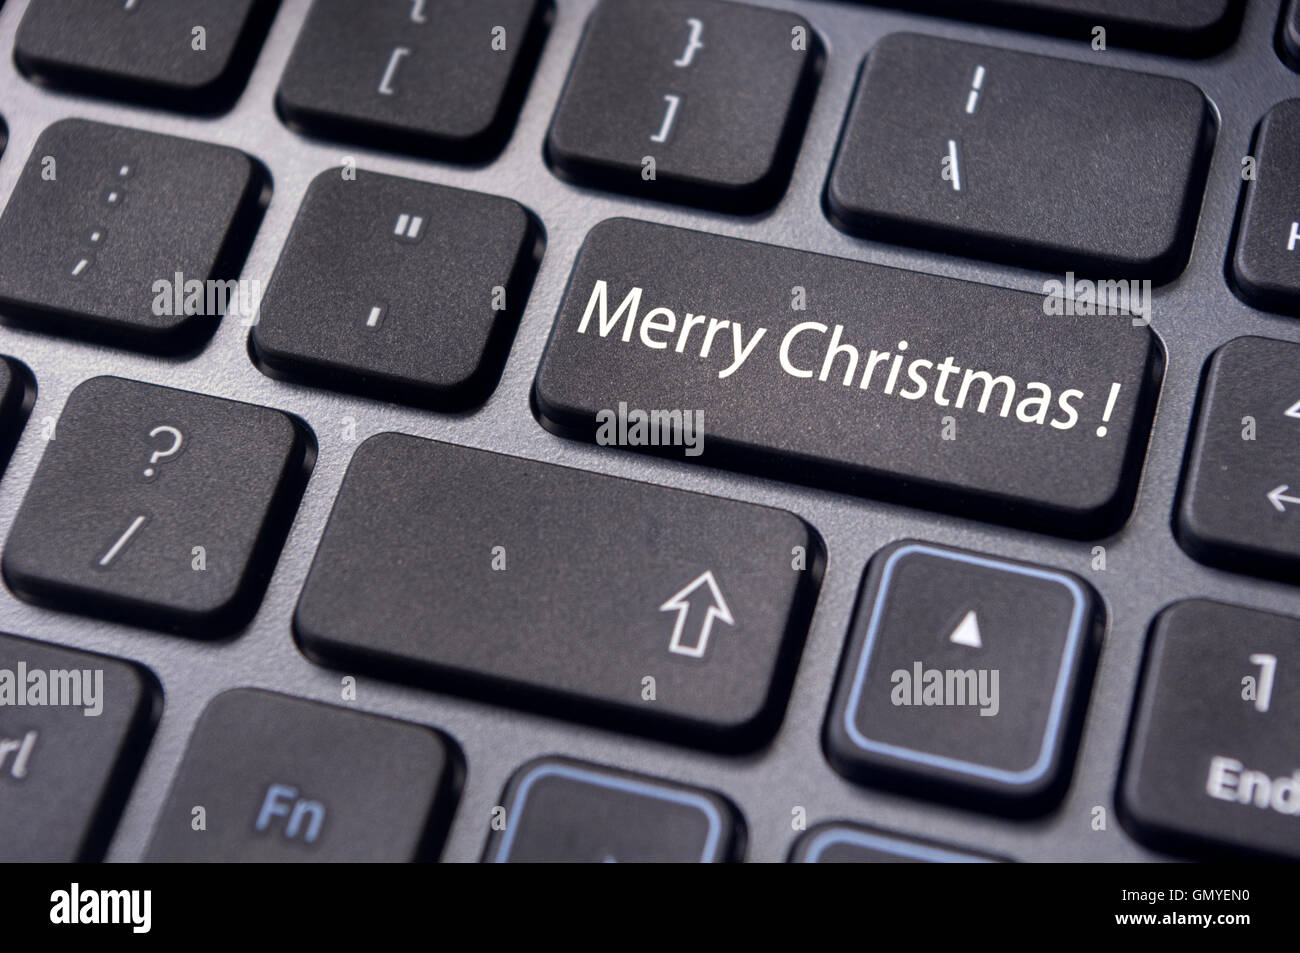 merry christmas greetings on keyboard enter key Stock Photo